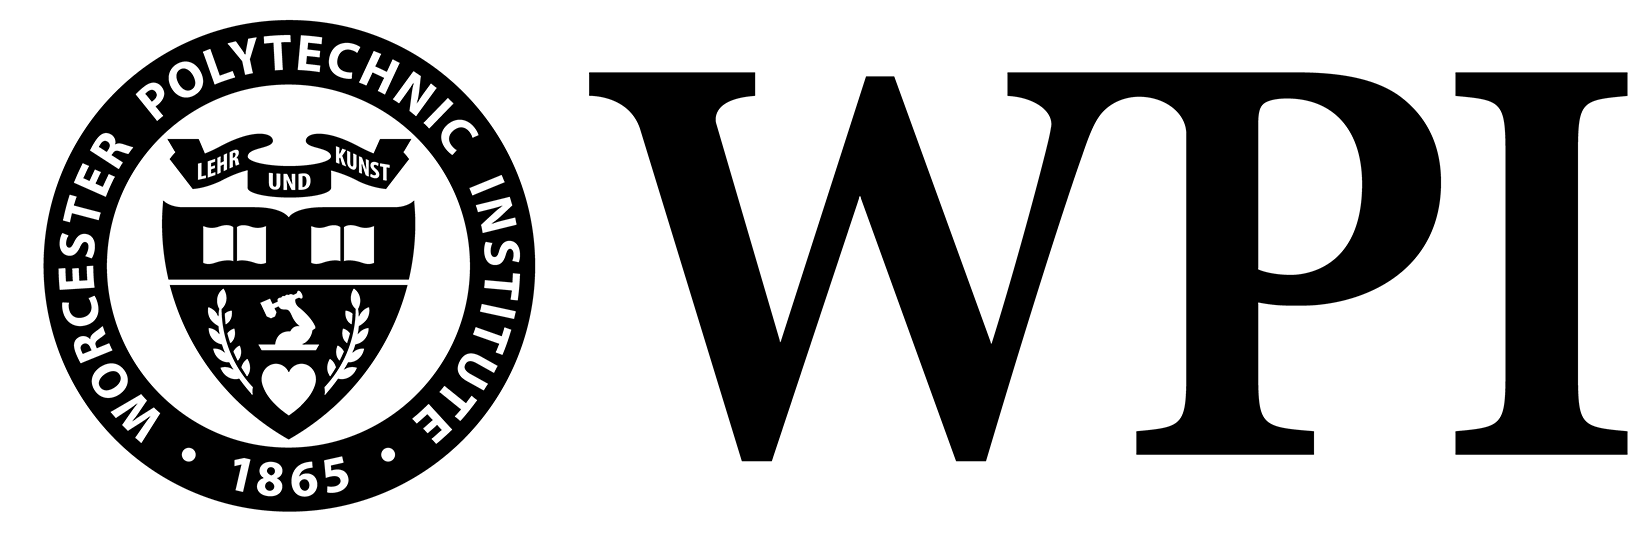 WPI logo in all black with black seal